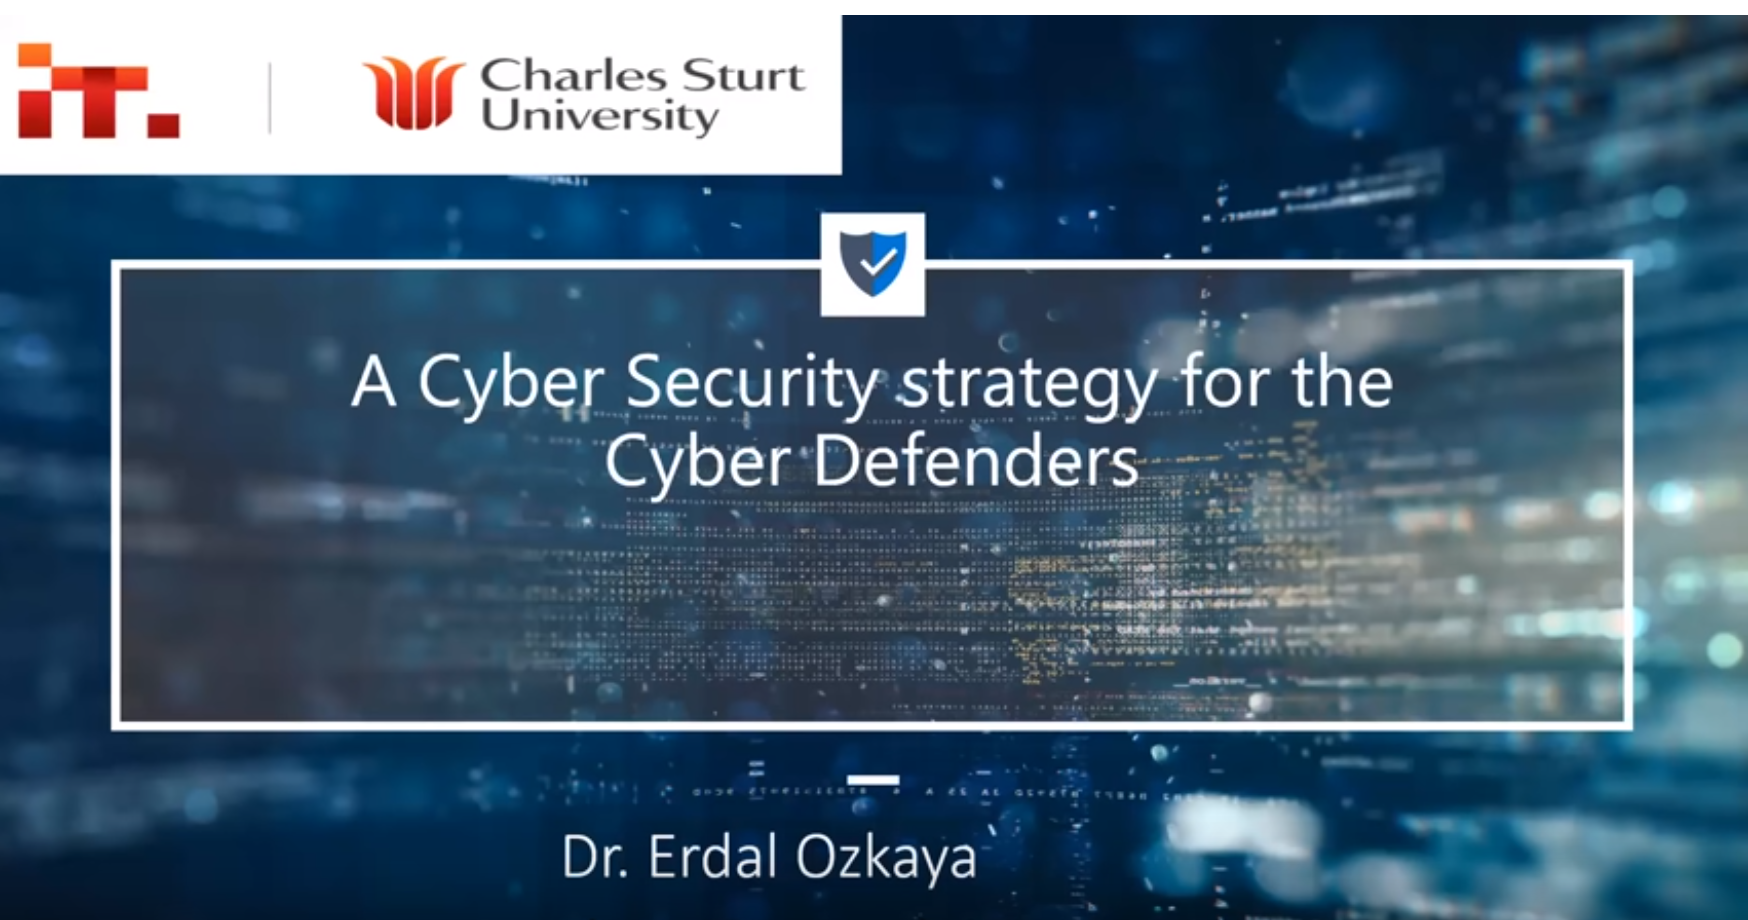 Cybersecurity Strategy for Cyber Defenders - Free VIDE0 | Dr. Erdal Ozkaya  - Cybersecurity Blog